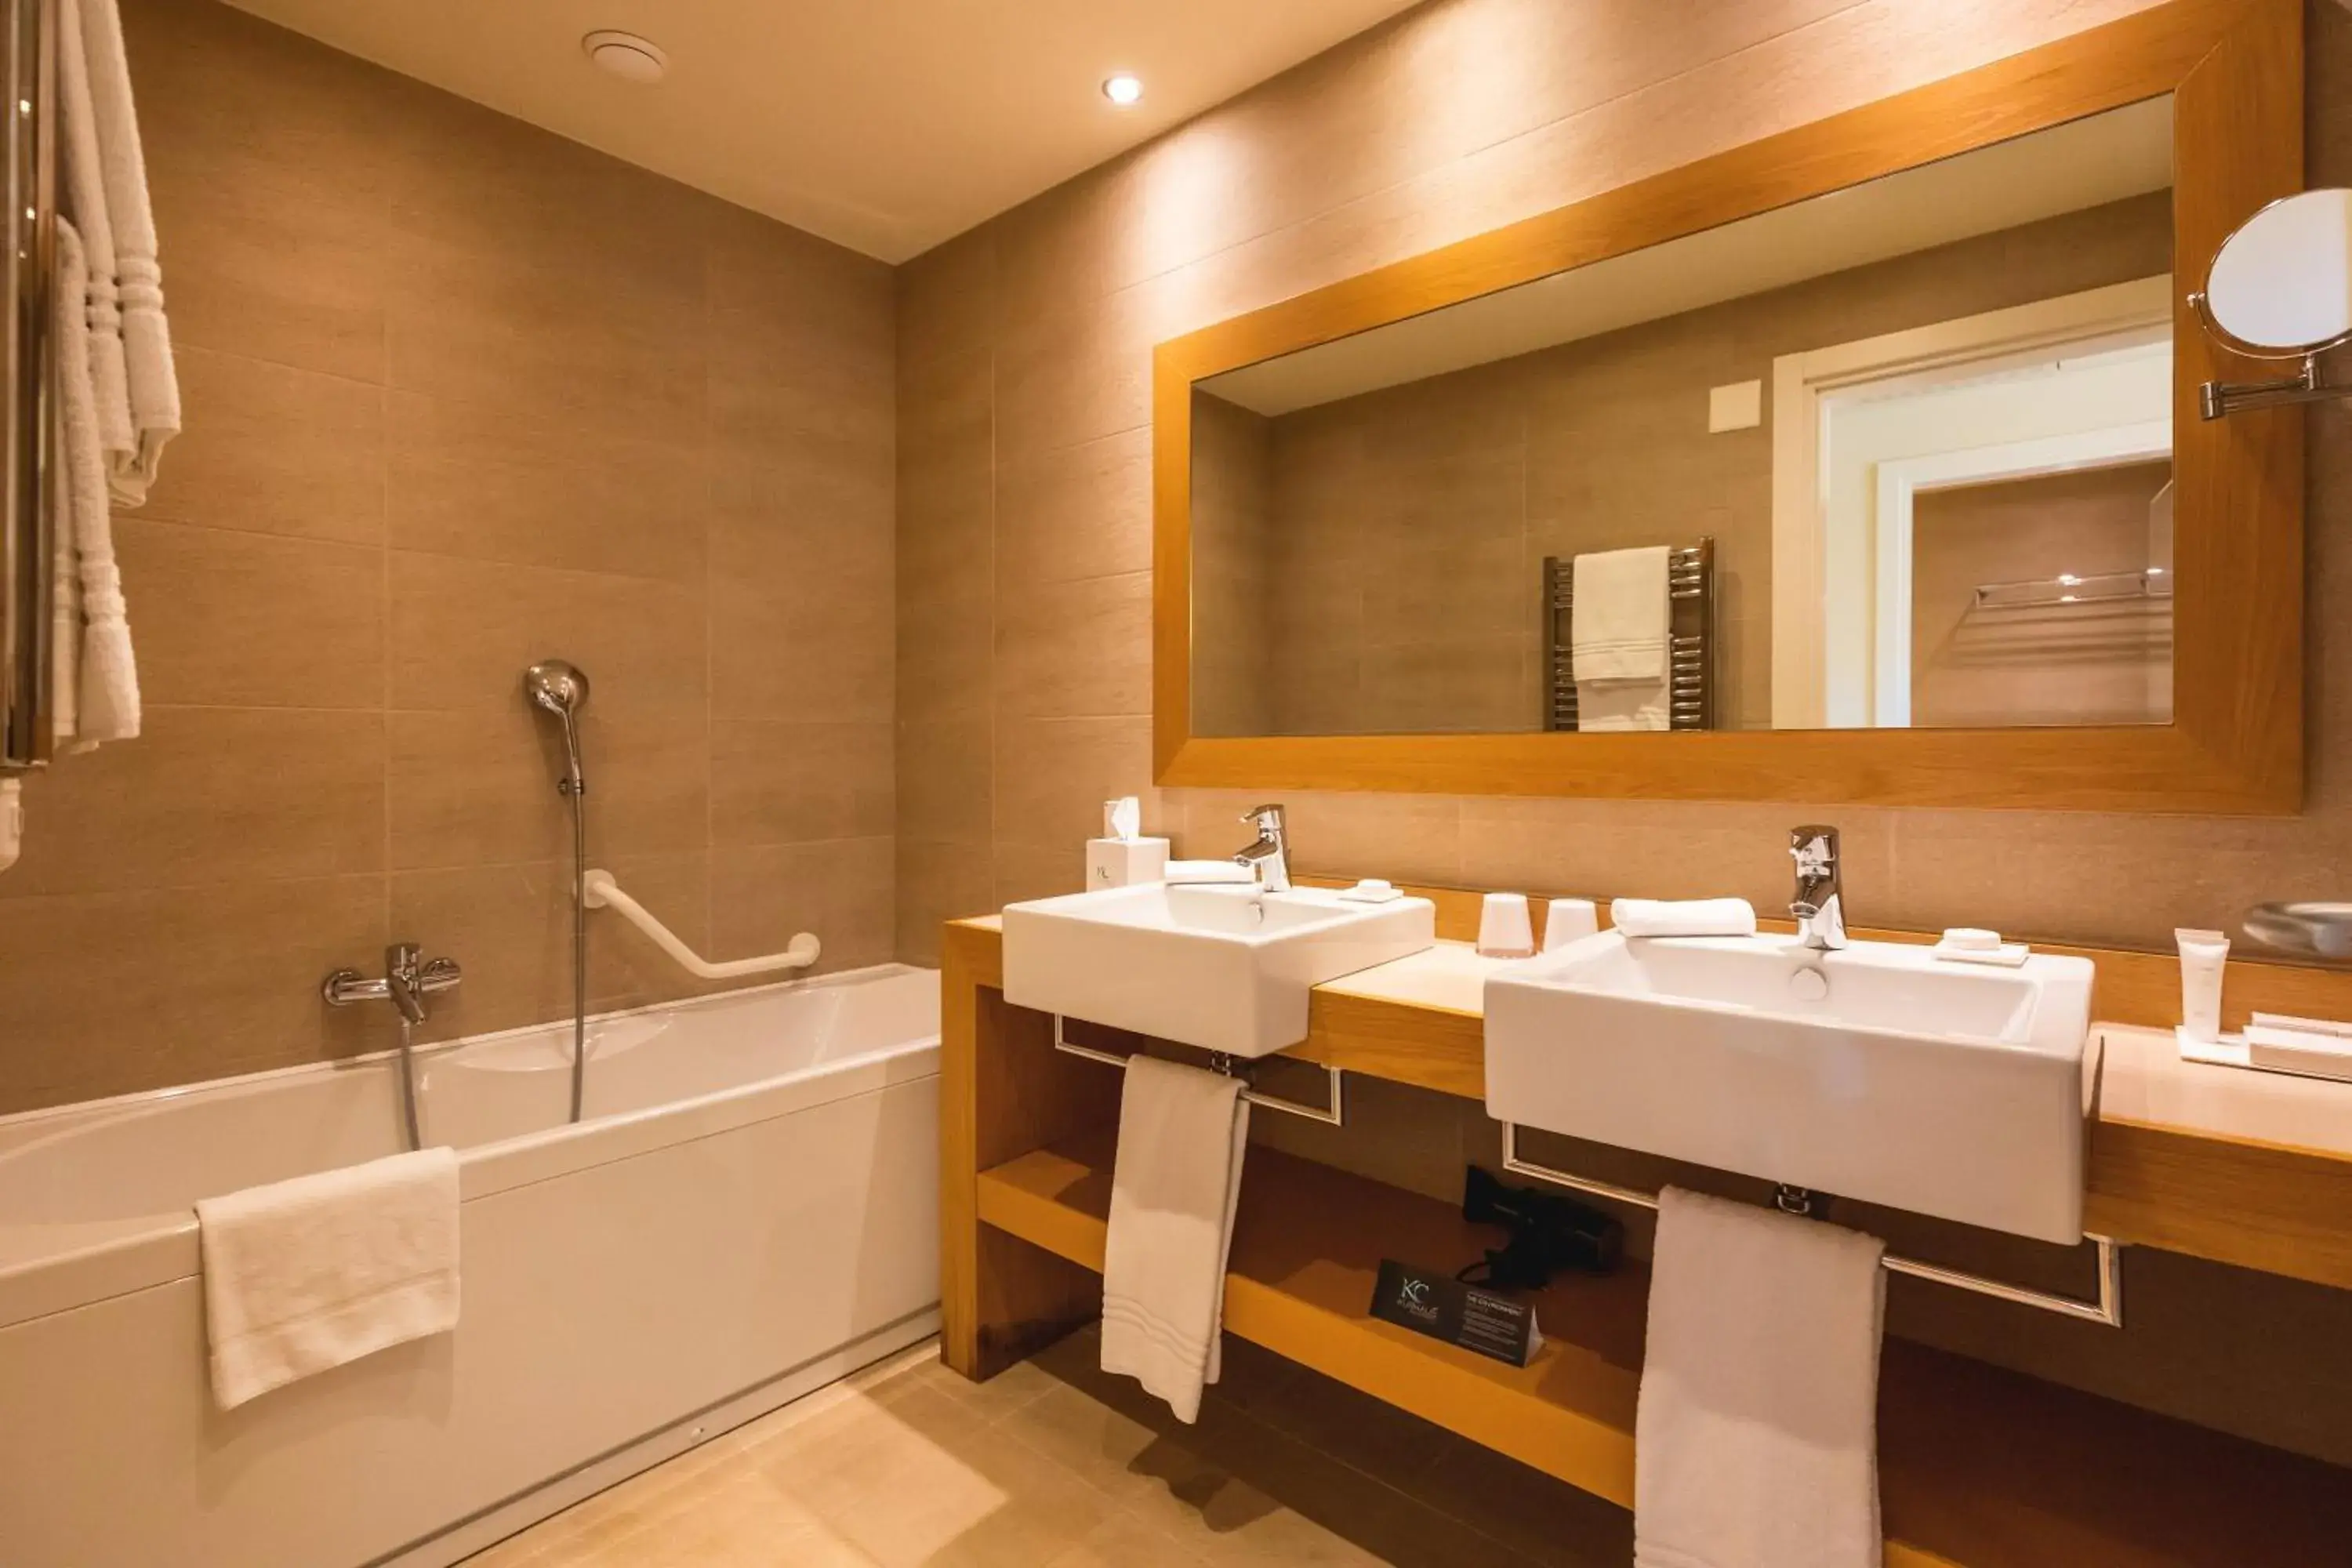 Bathroom in Kurhaus Cademario Hotel & DOT Spa - Ticino Hotels Group